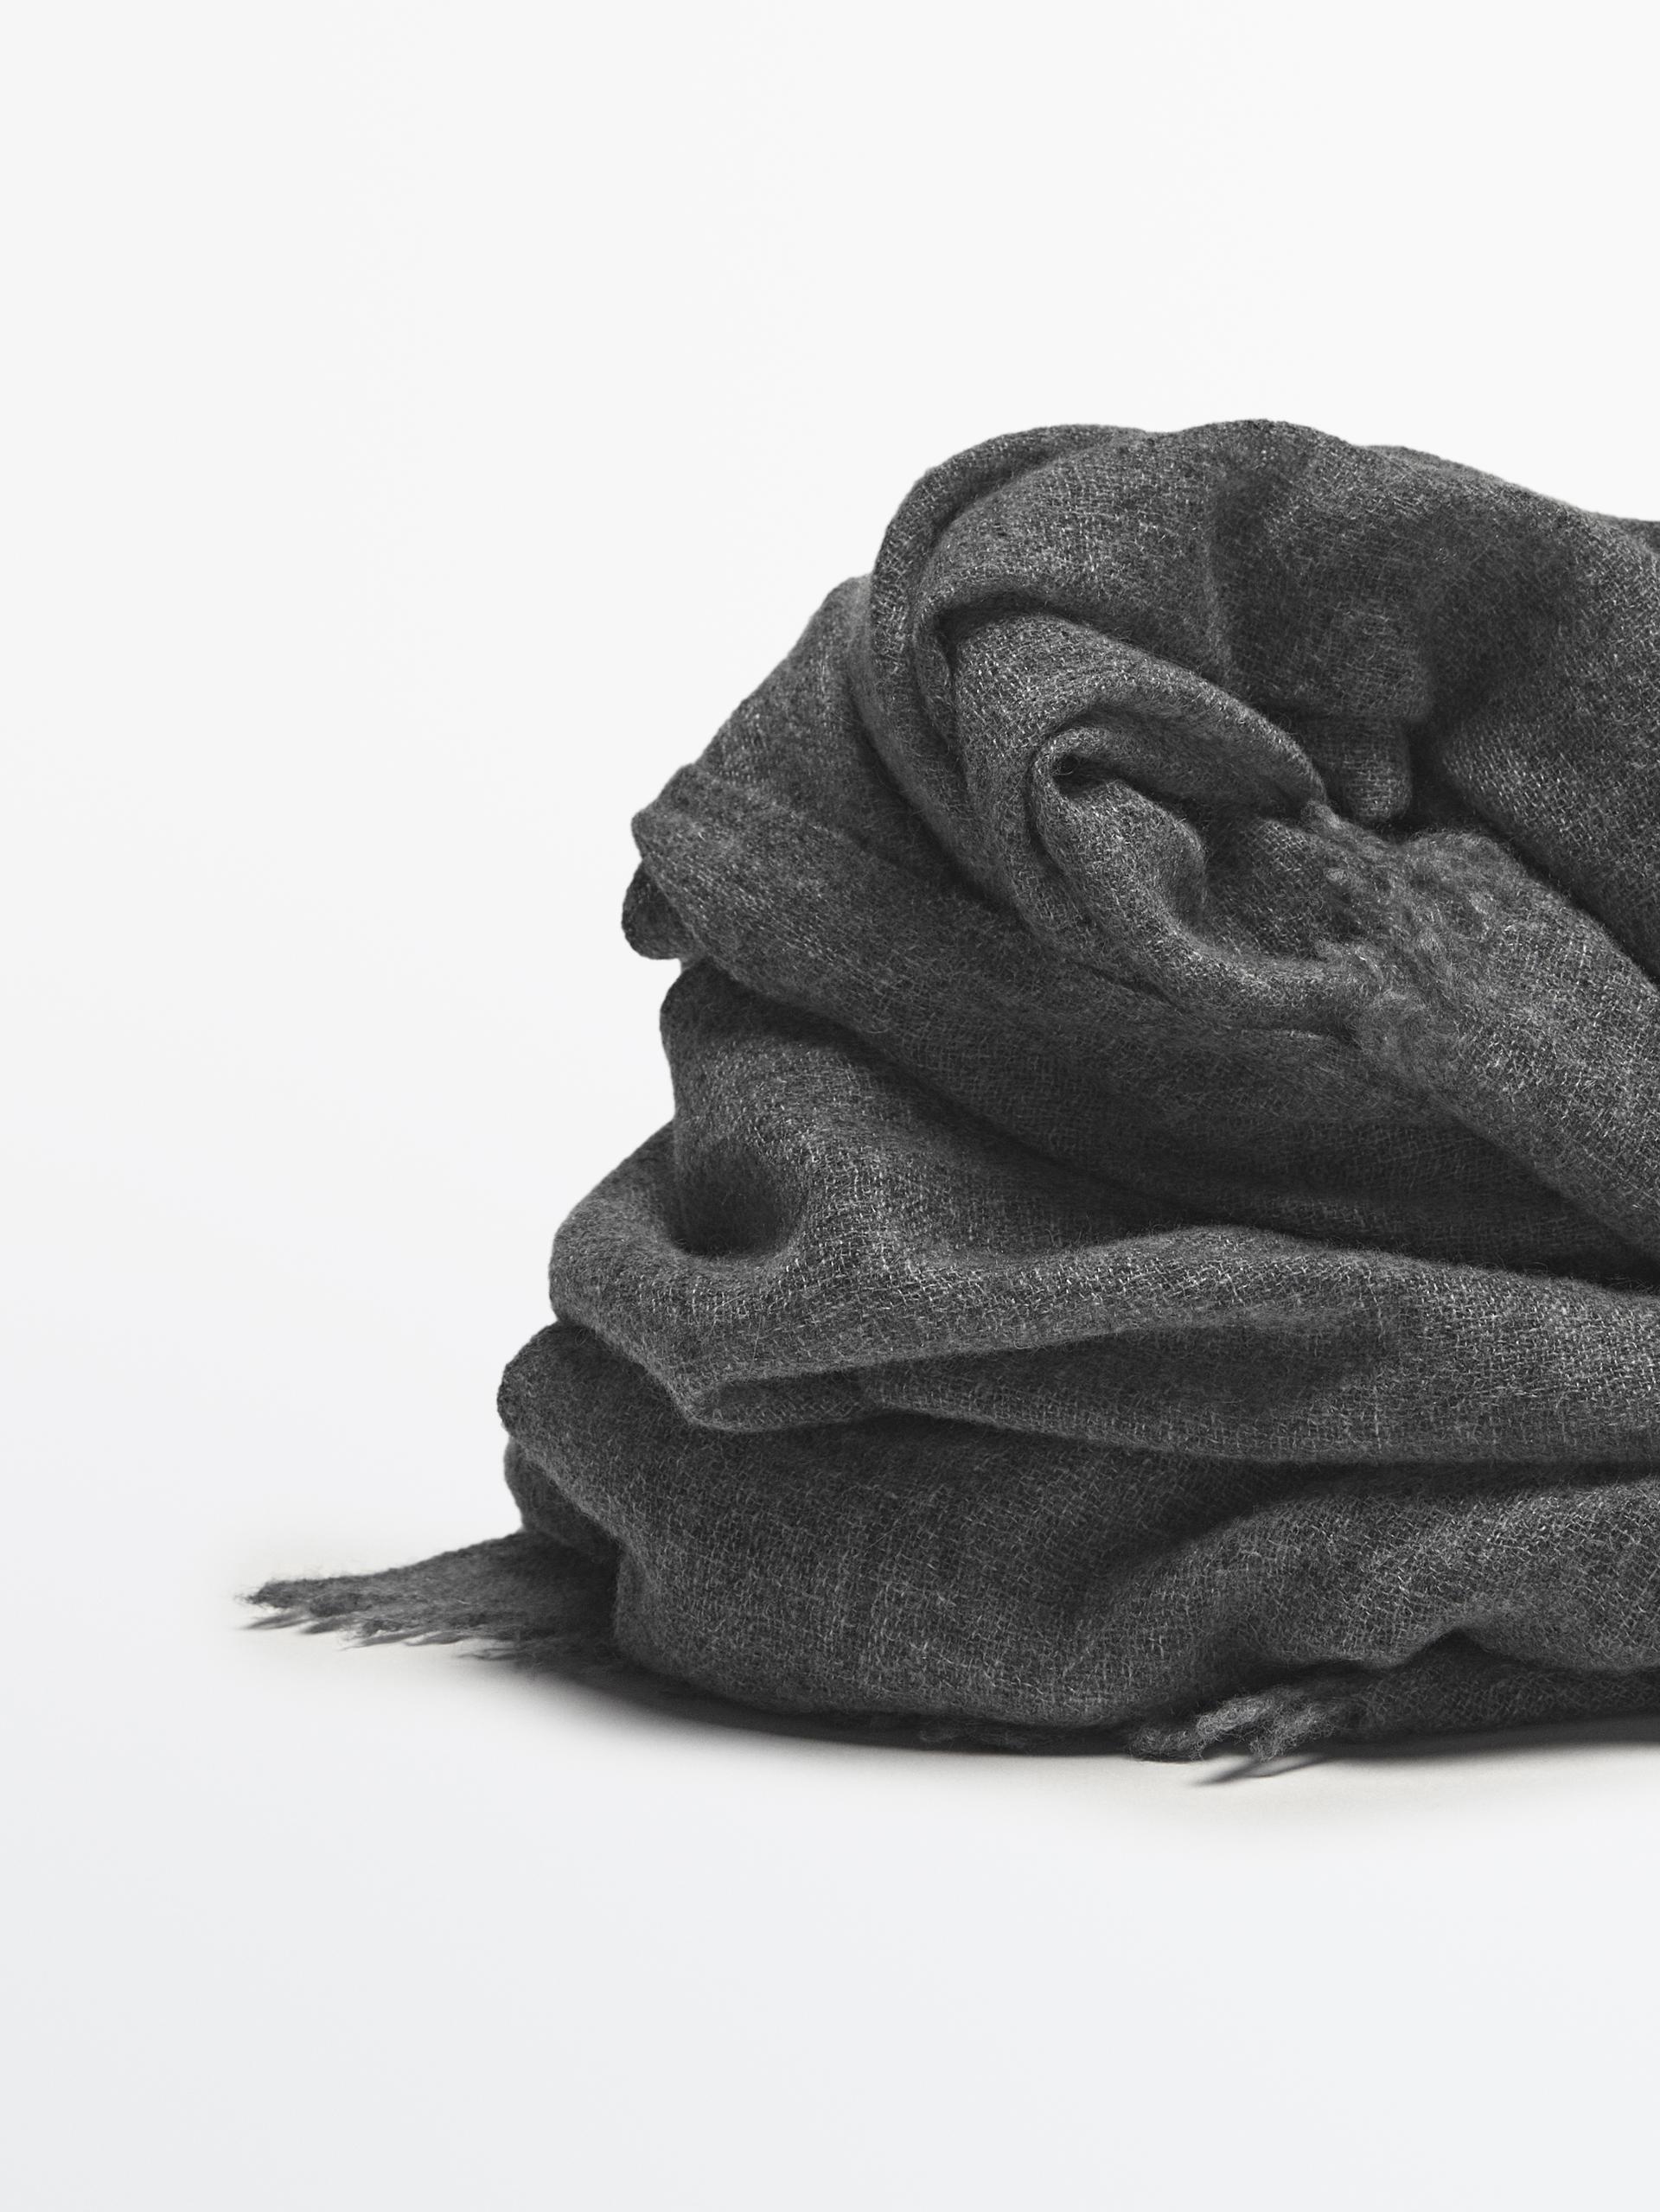 100% cashmere scarf · Navy Blue, Grey Marl, Mink, Cream, Black, Grey ·  Scarves